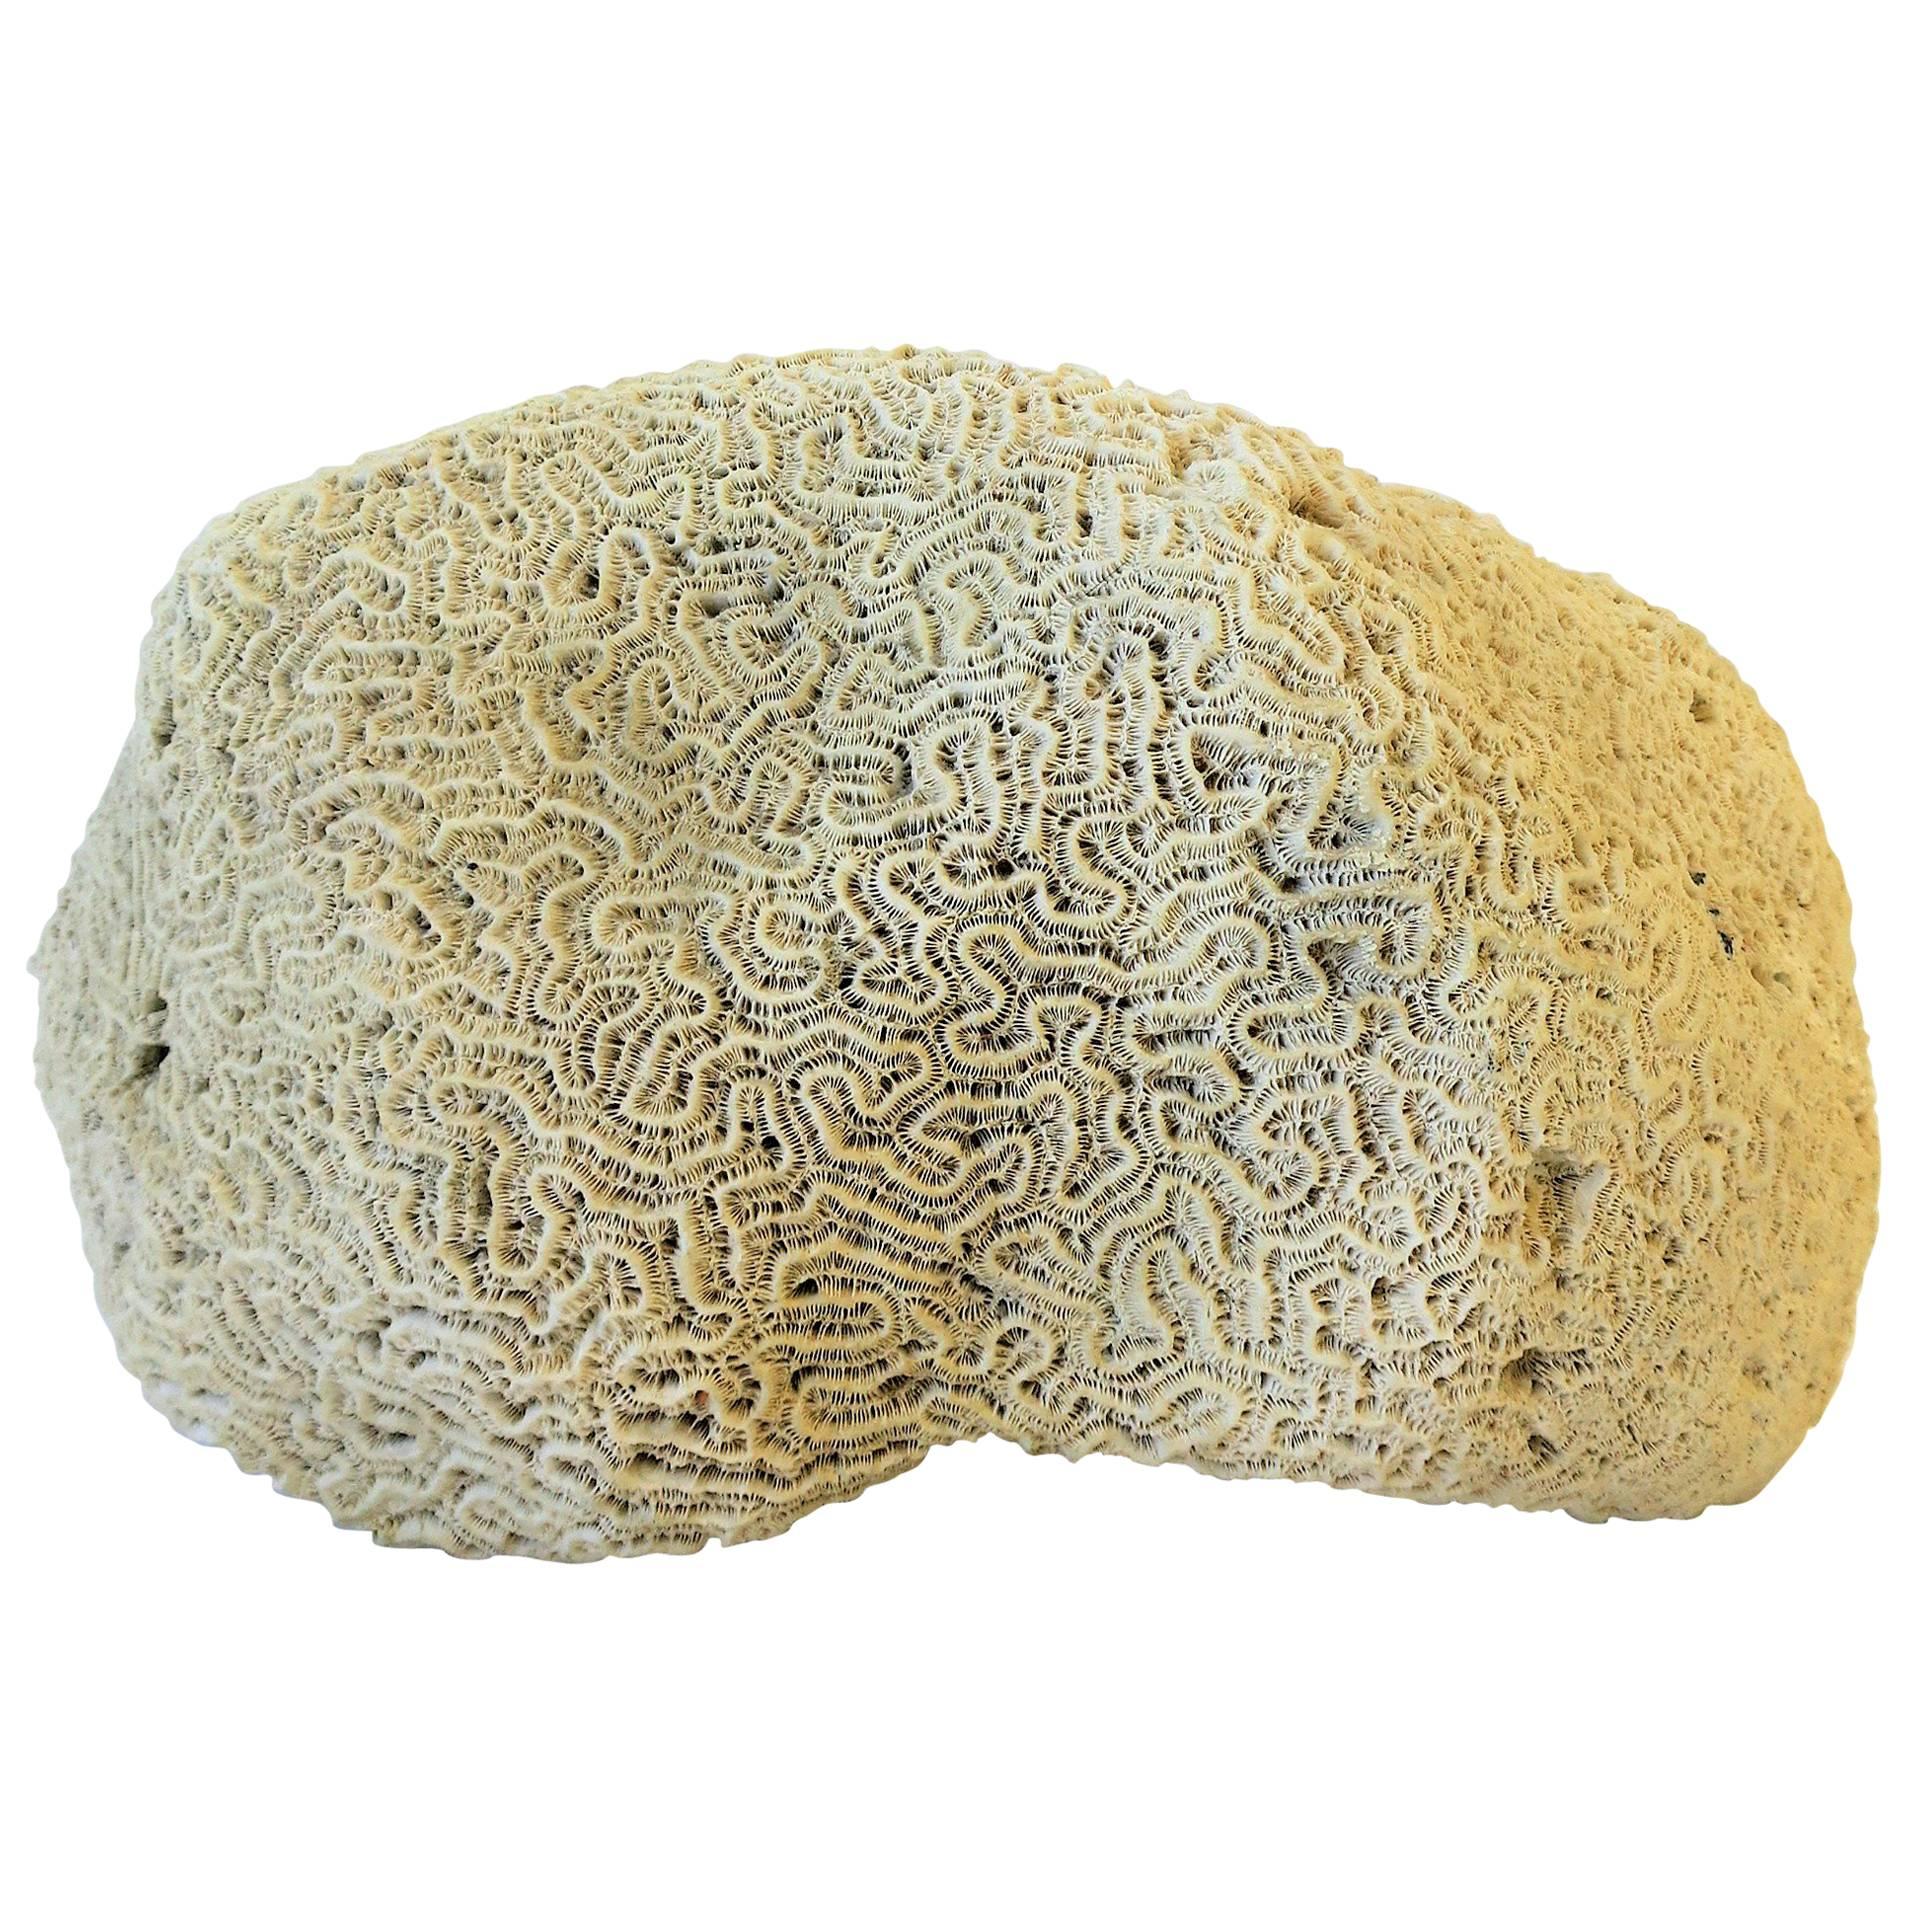 Brain Coral Natural Specimen